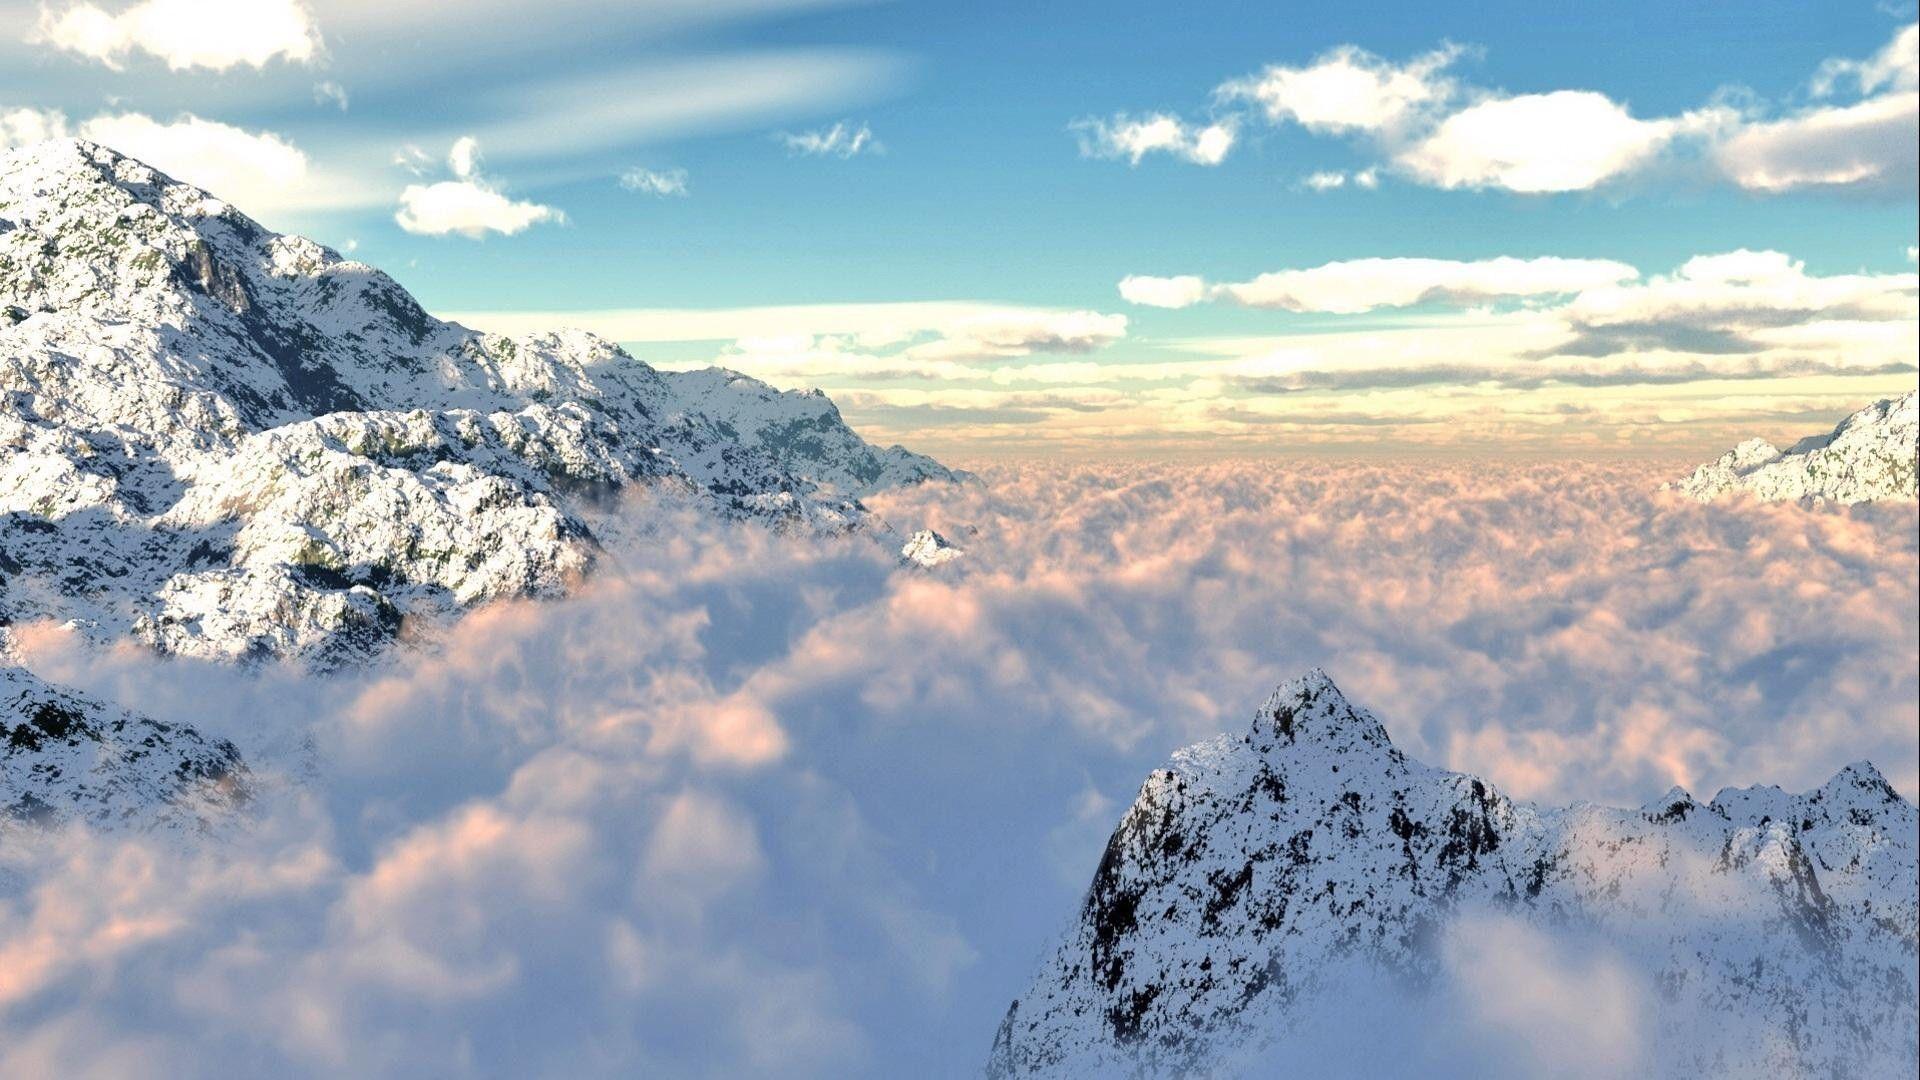 Mountain View above Cloud Wallpaper